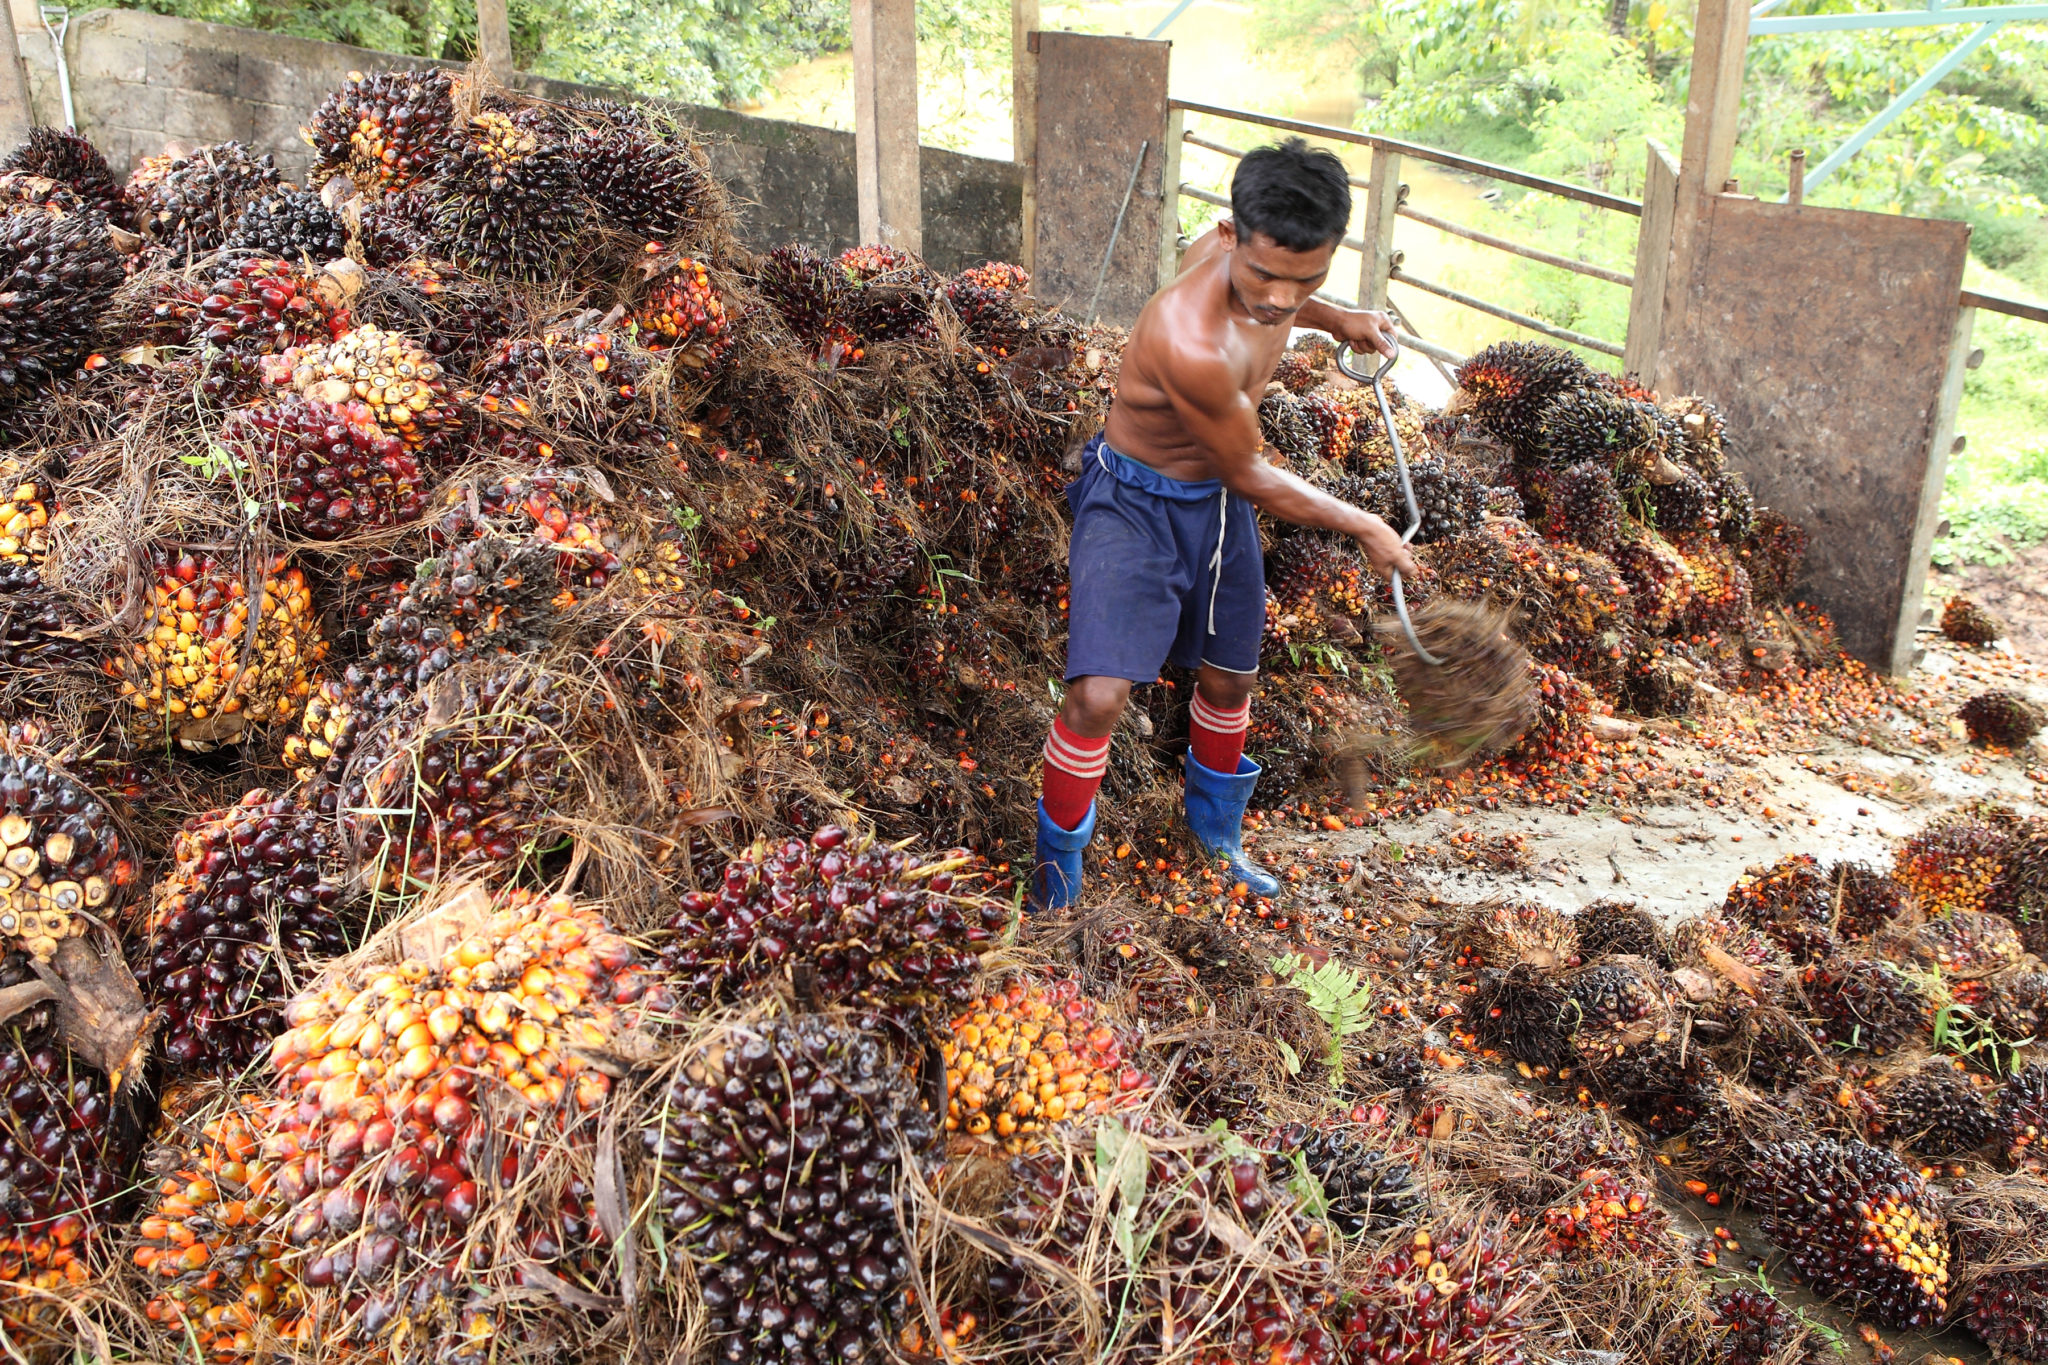 A palm oil plantation worker rakes palm plants